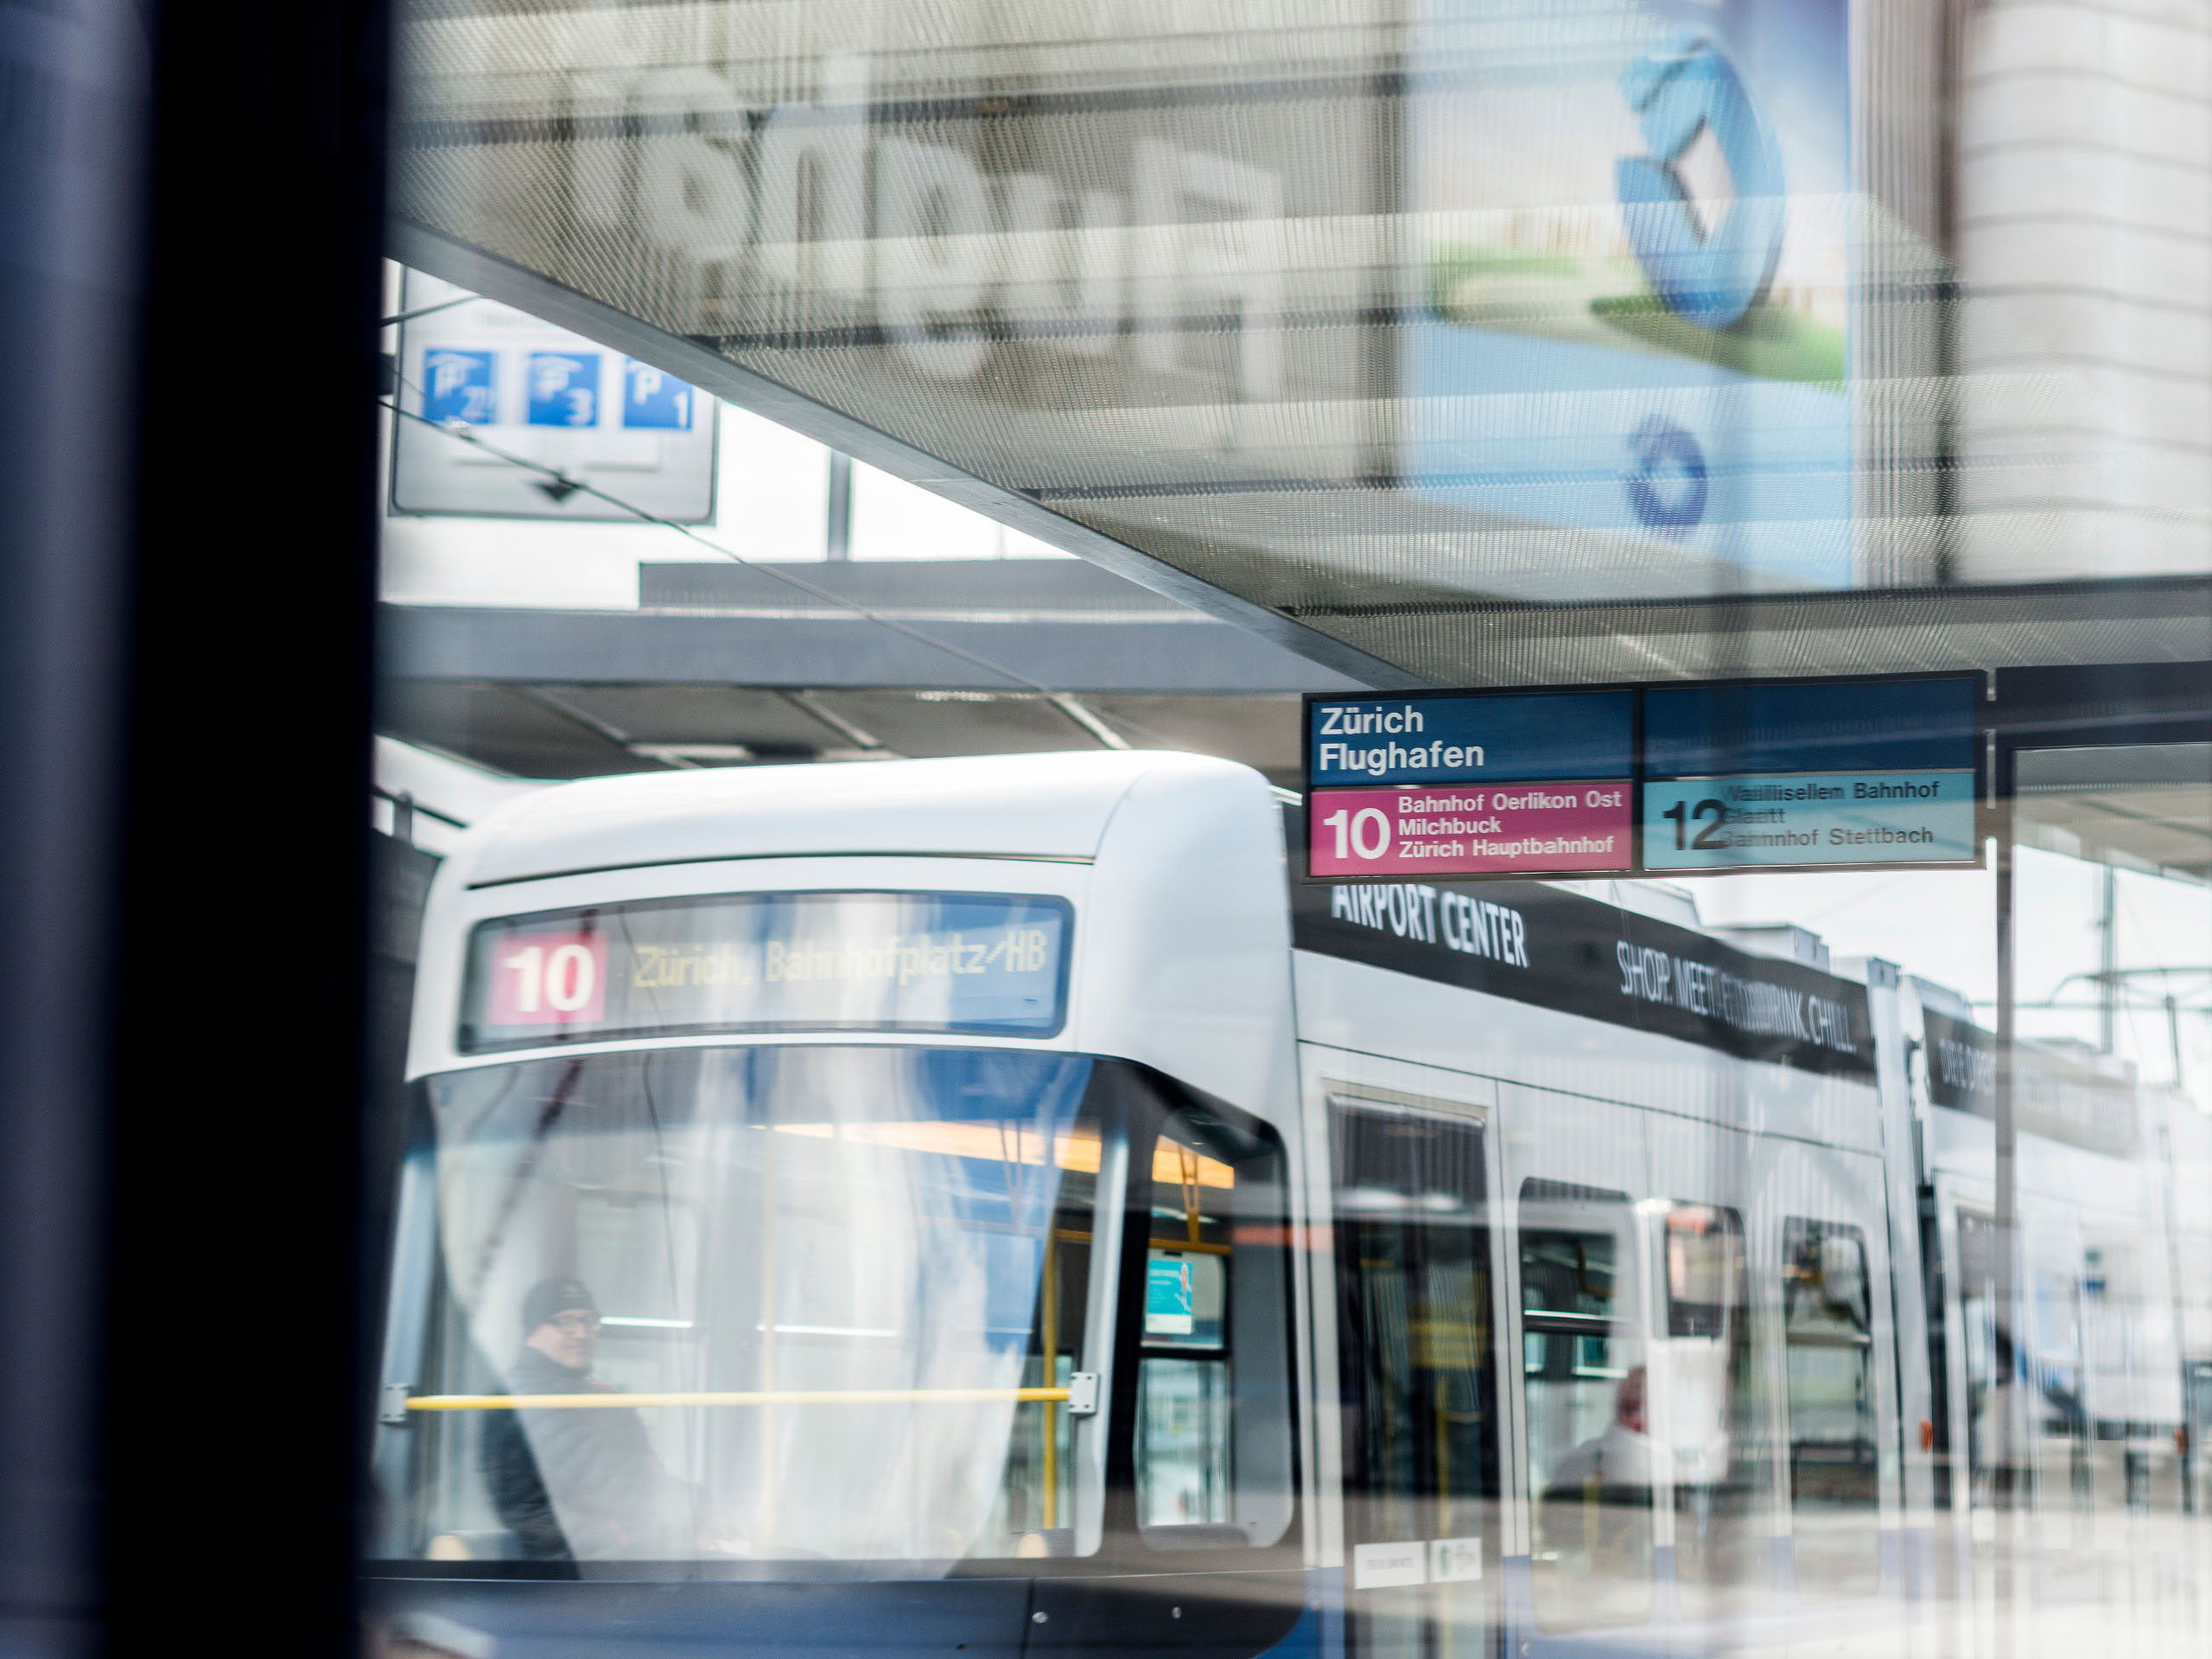 Glattalbahn tram serves airport